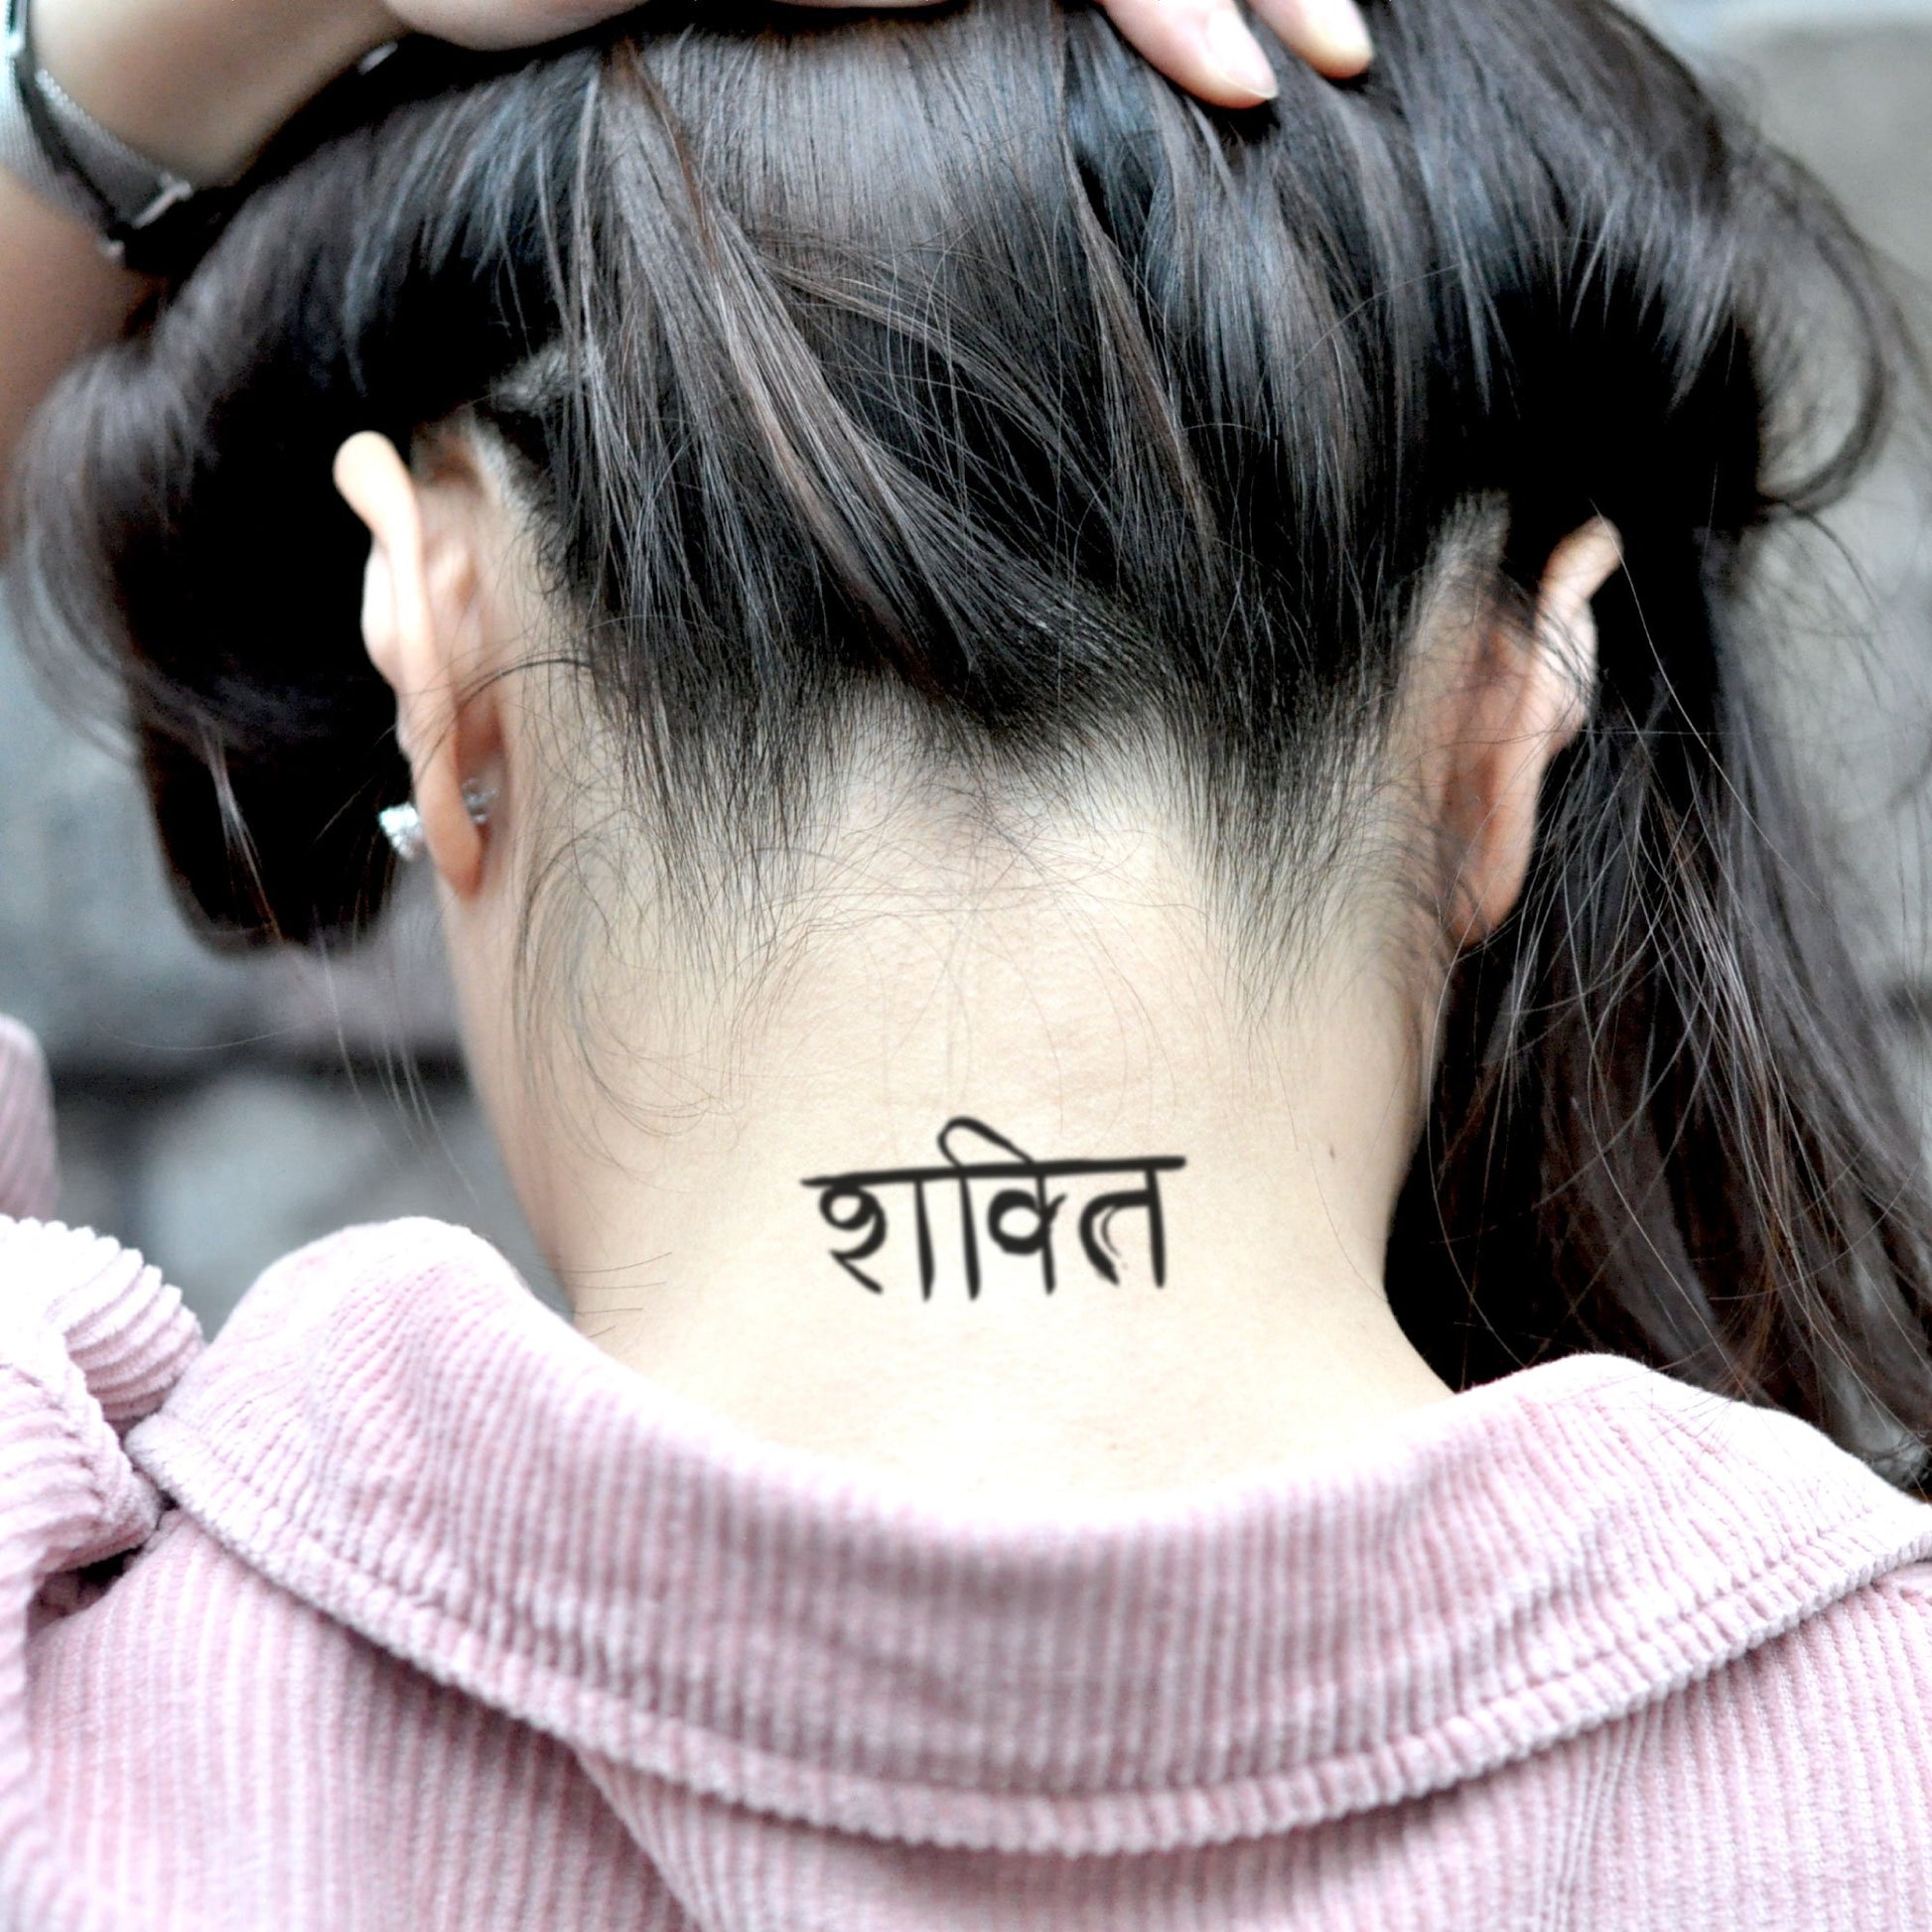 fake small shakti sanskrit hindu side lettering temporary tattoo sticker design idea on neck